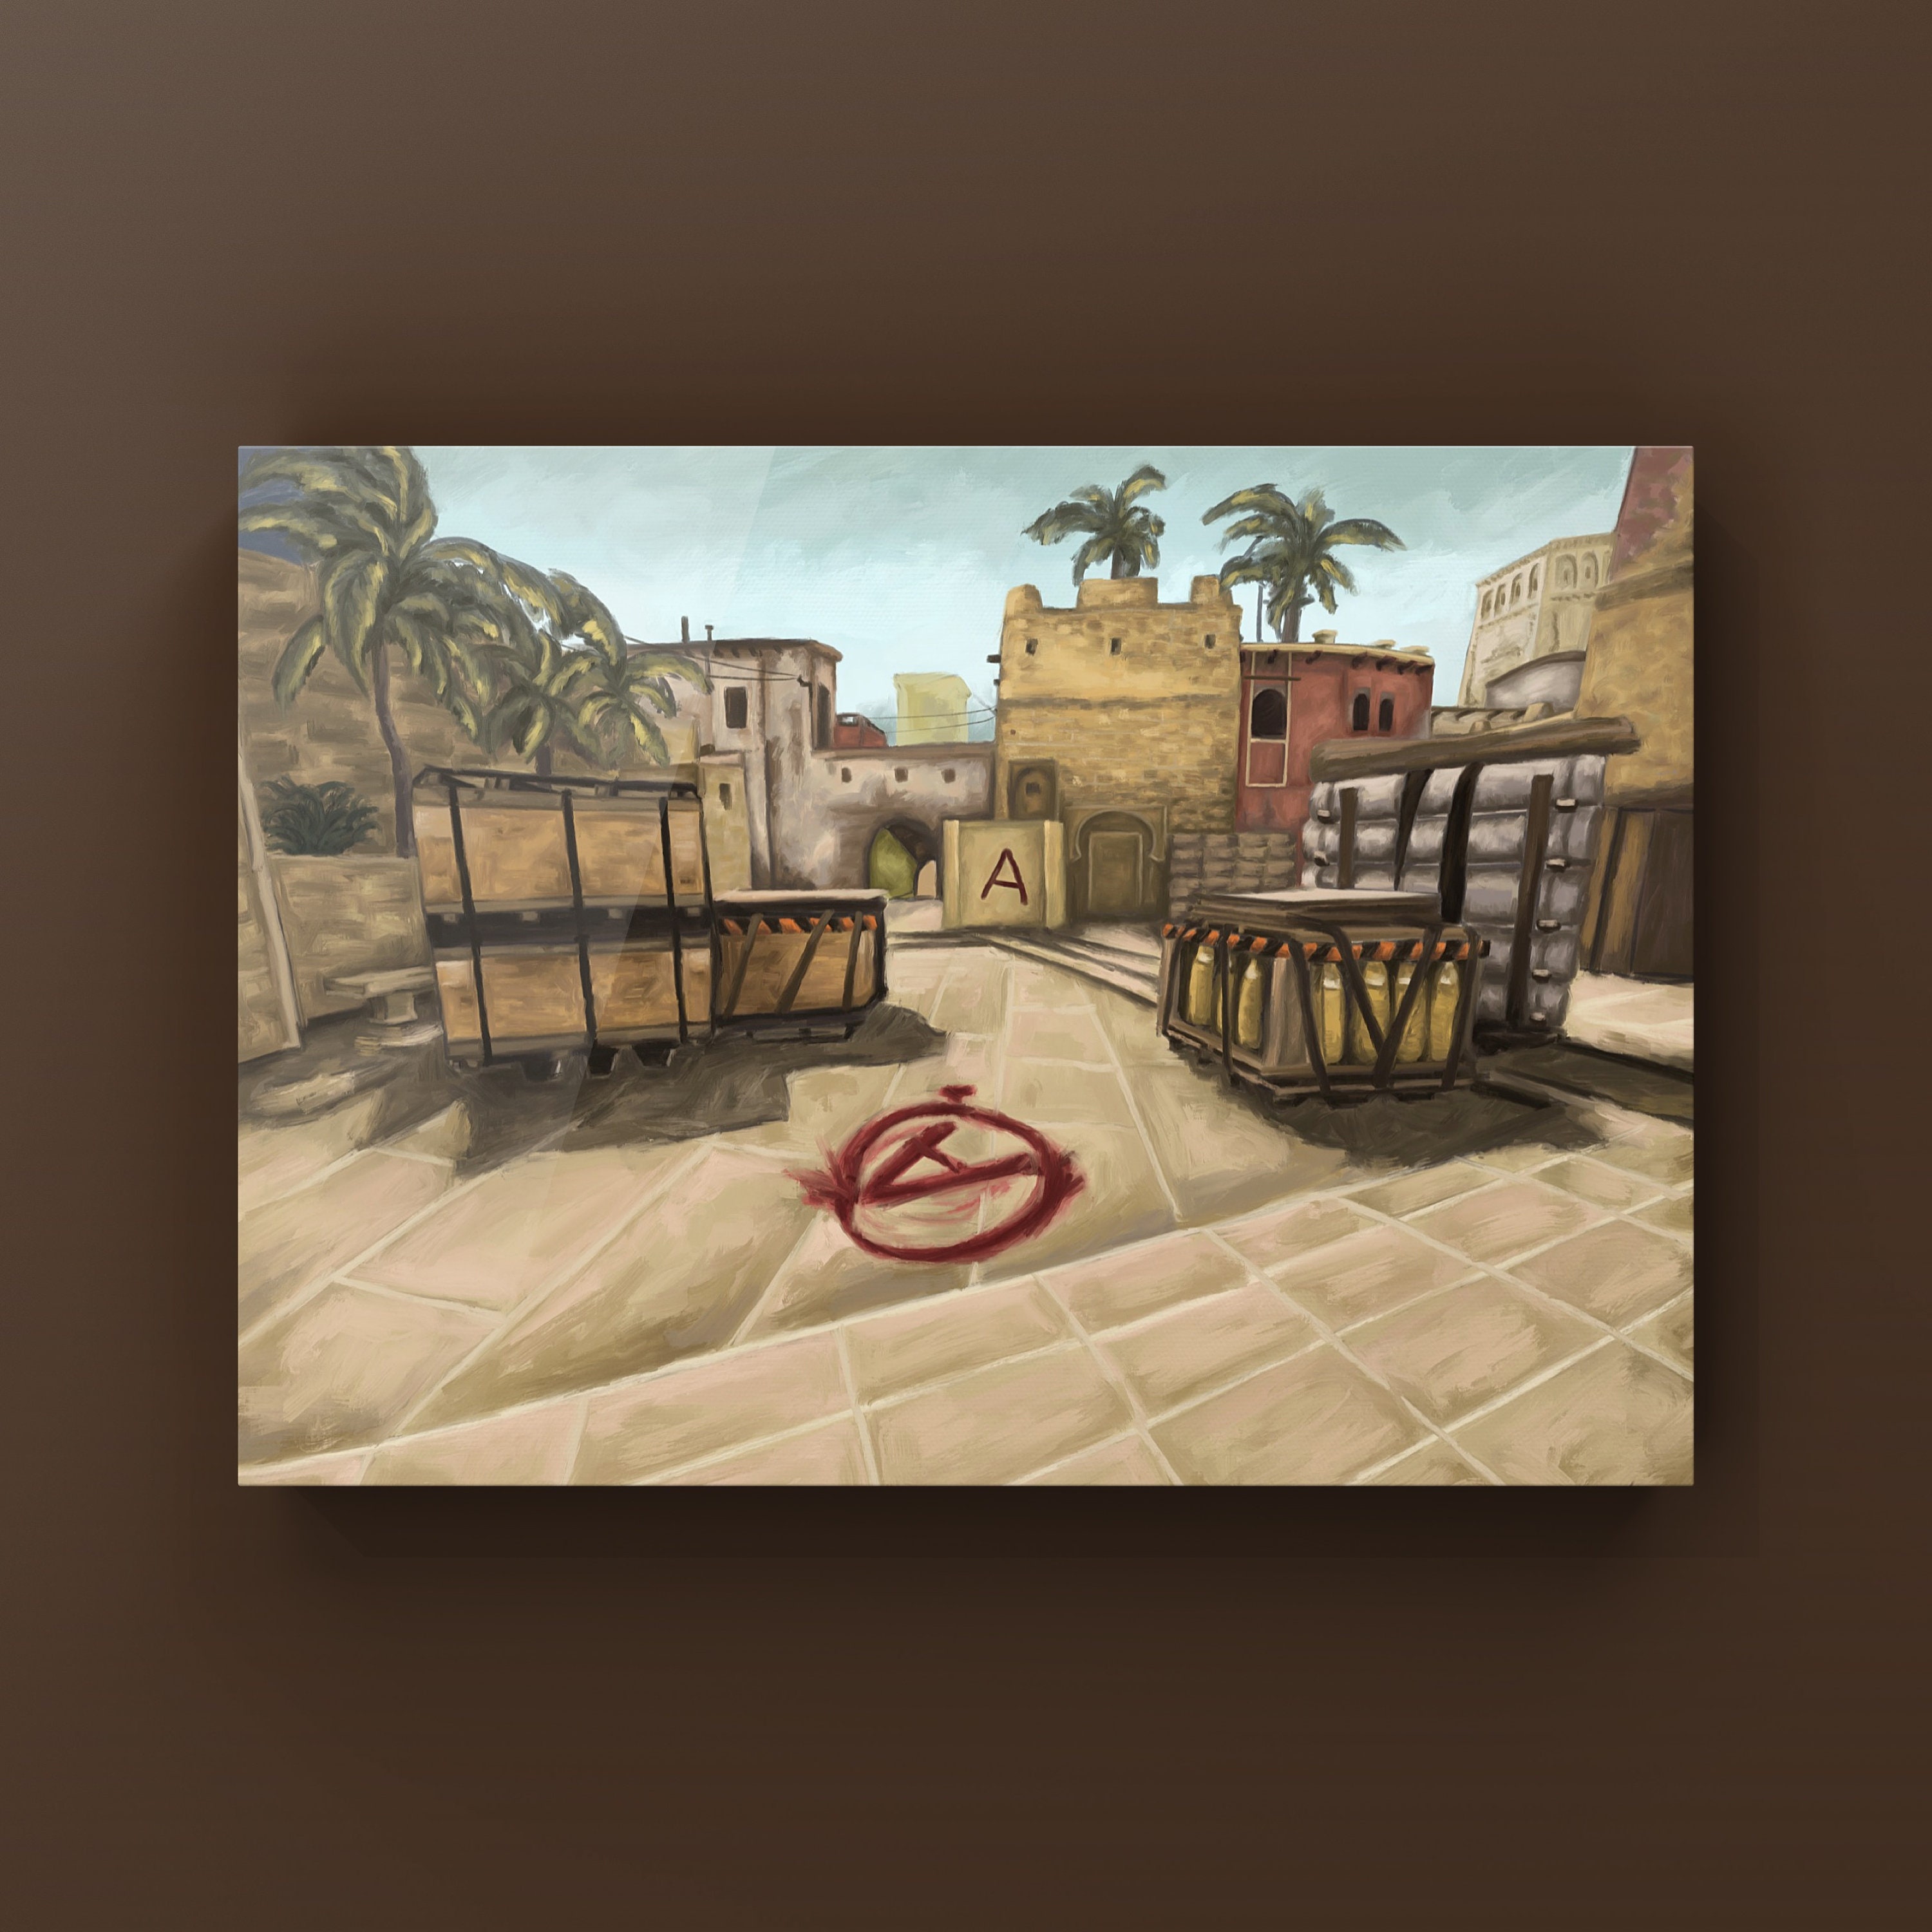 Counter-Strike 2 PC Box Art Cover by Watsonator117